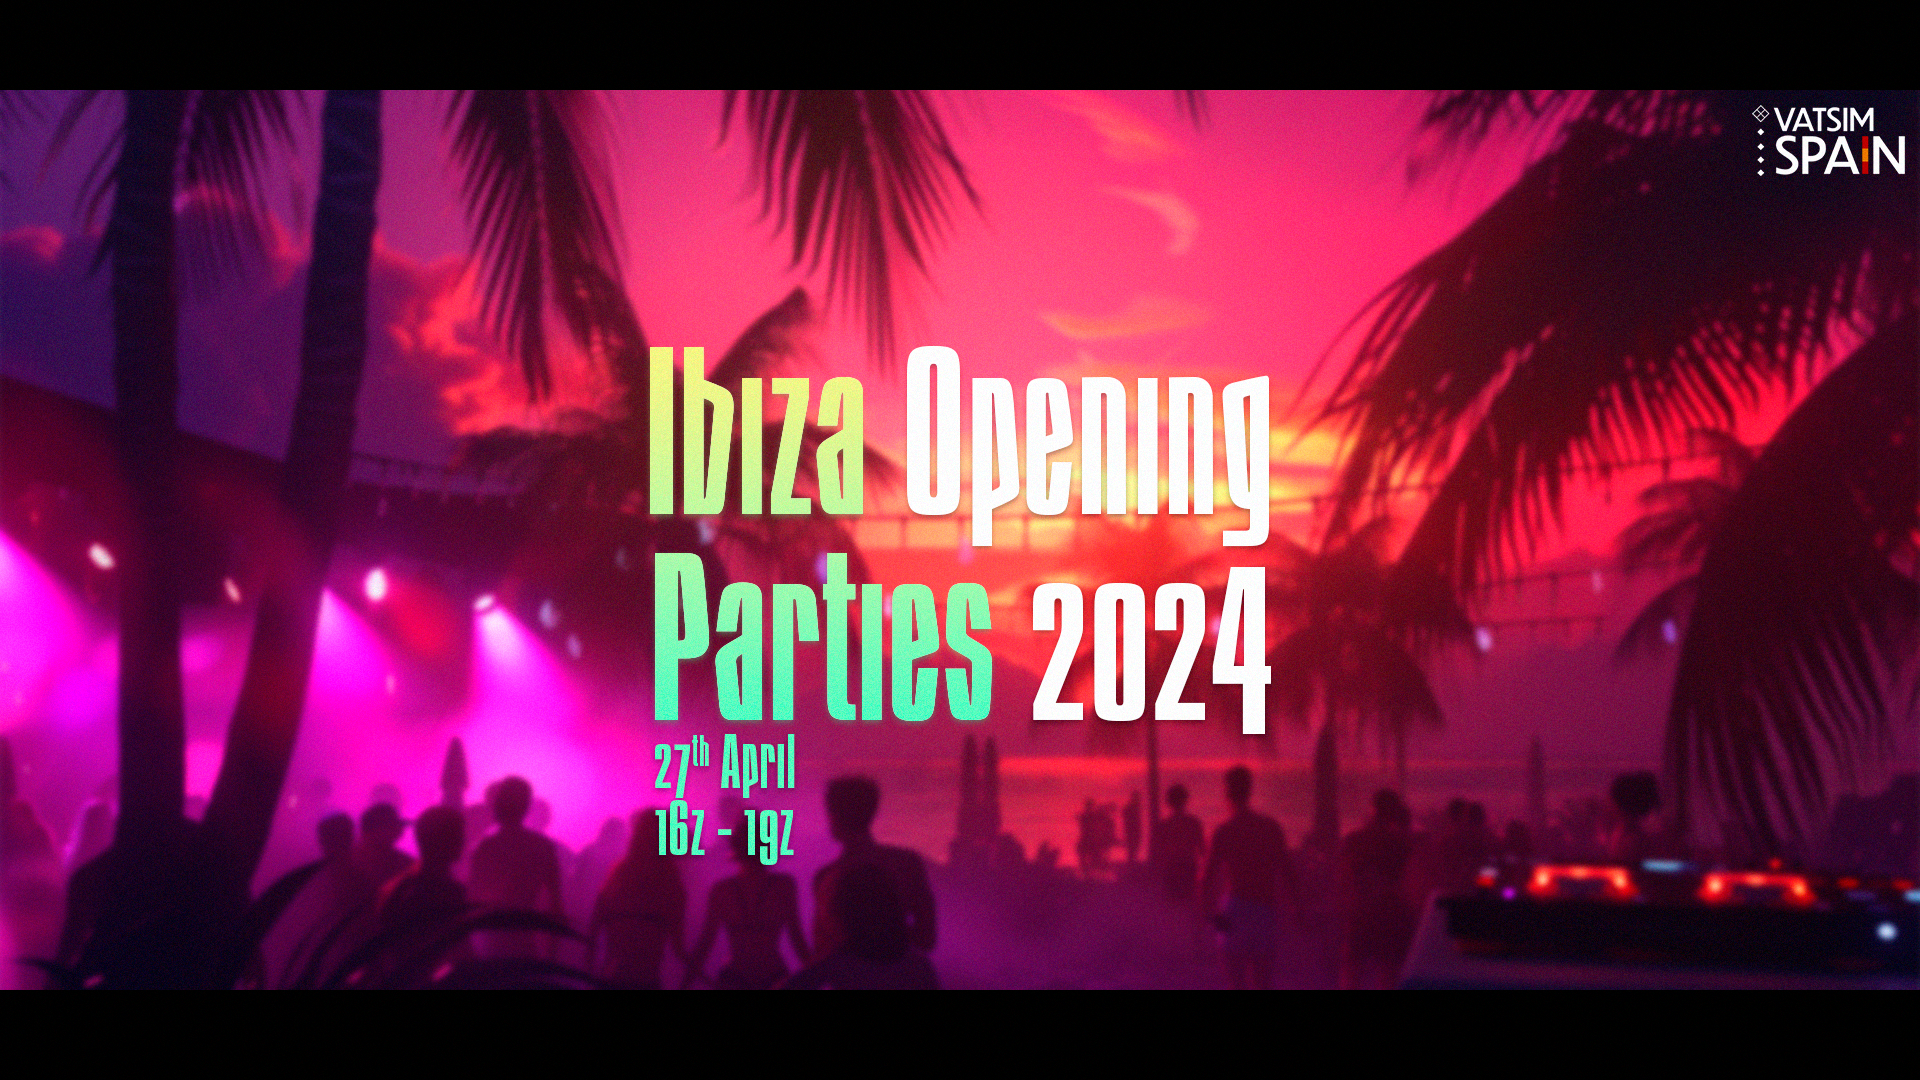 Ibiza Opening Parties 2024 - Virtual Norwegian Events